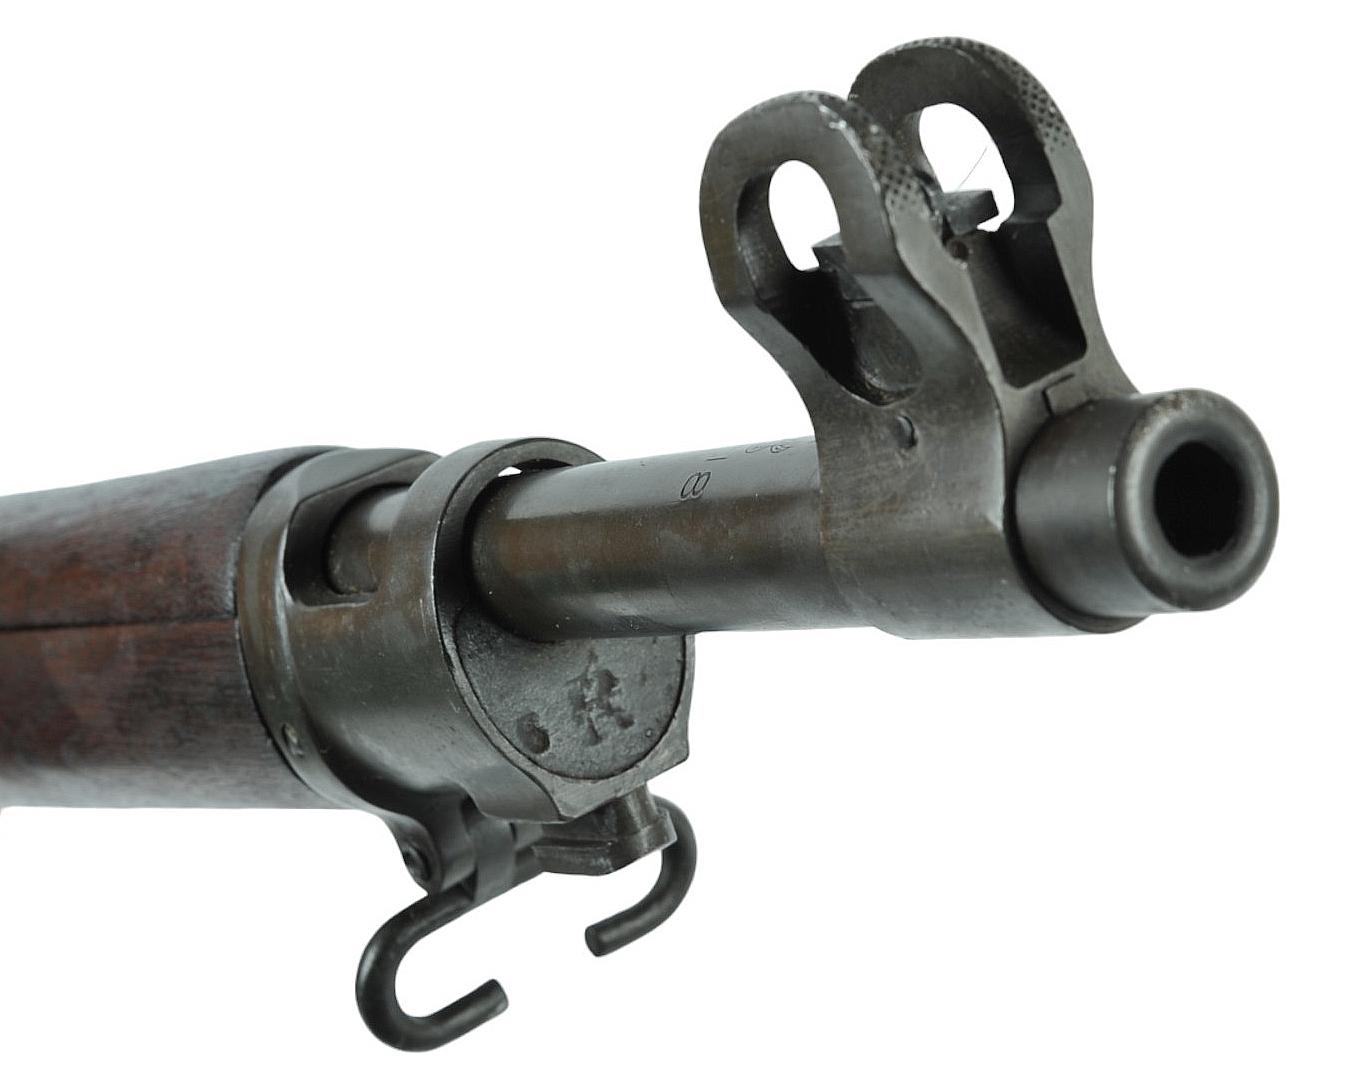 Remington M1917 30-06 Bolt-action Rifle FFL Required:517448  (VDM1)